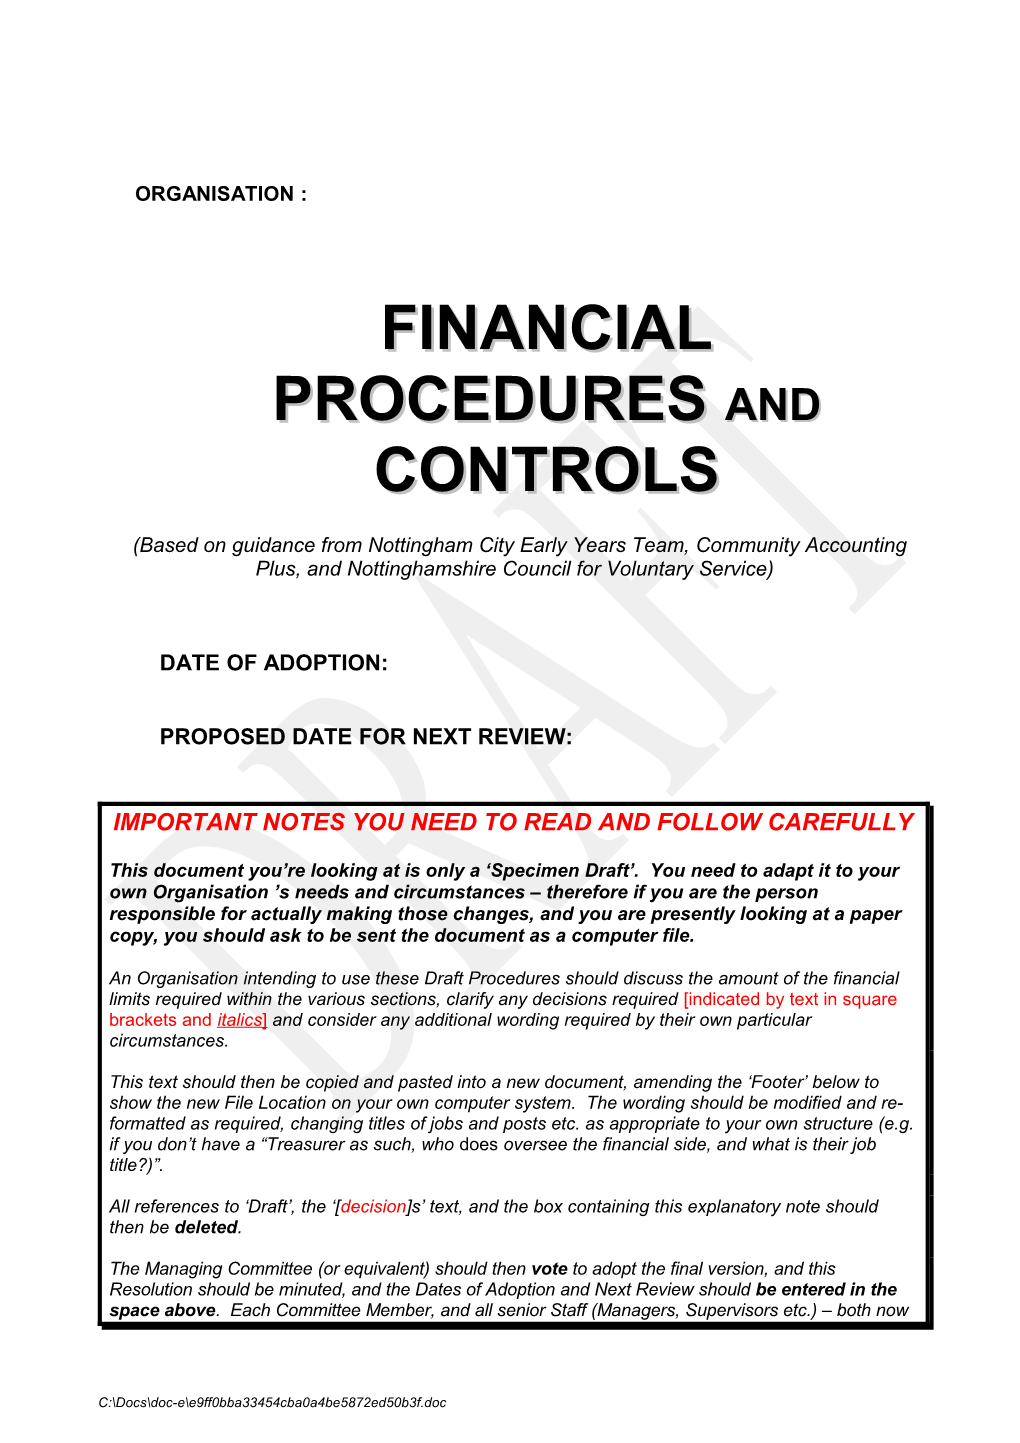 Financial Procedures and Controls